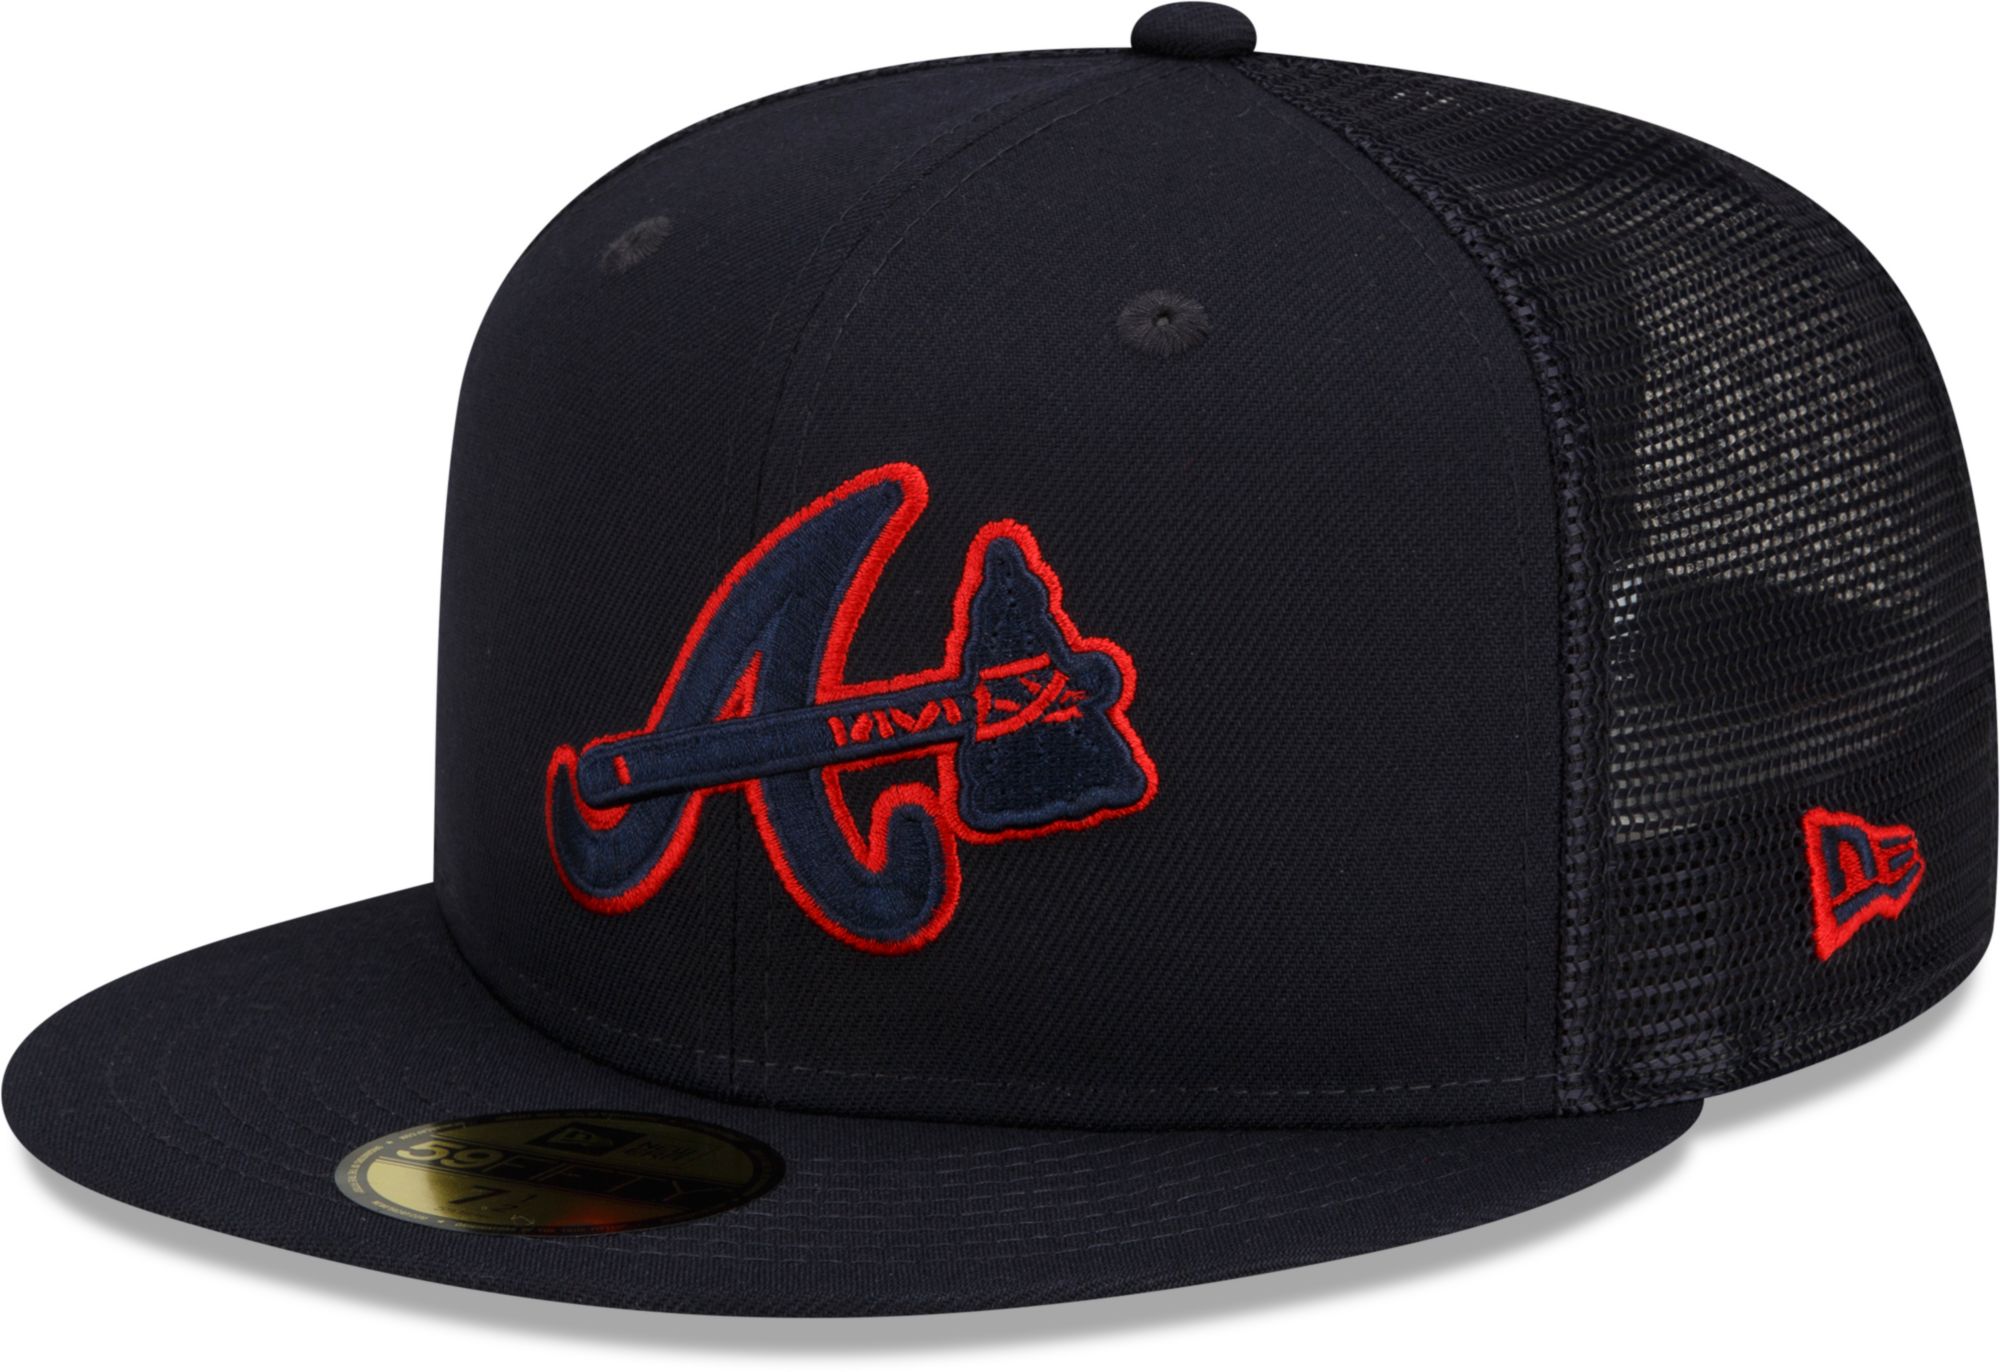 Atlanta Braves Baseball New Austin Riley 27 Singnature Unisex T-Shirt –  Teepital – Everyday New Aesthetic Designs